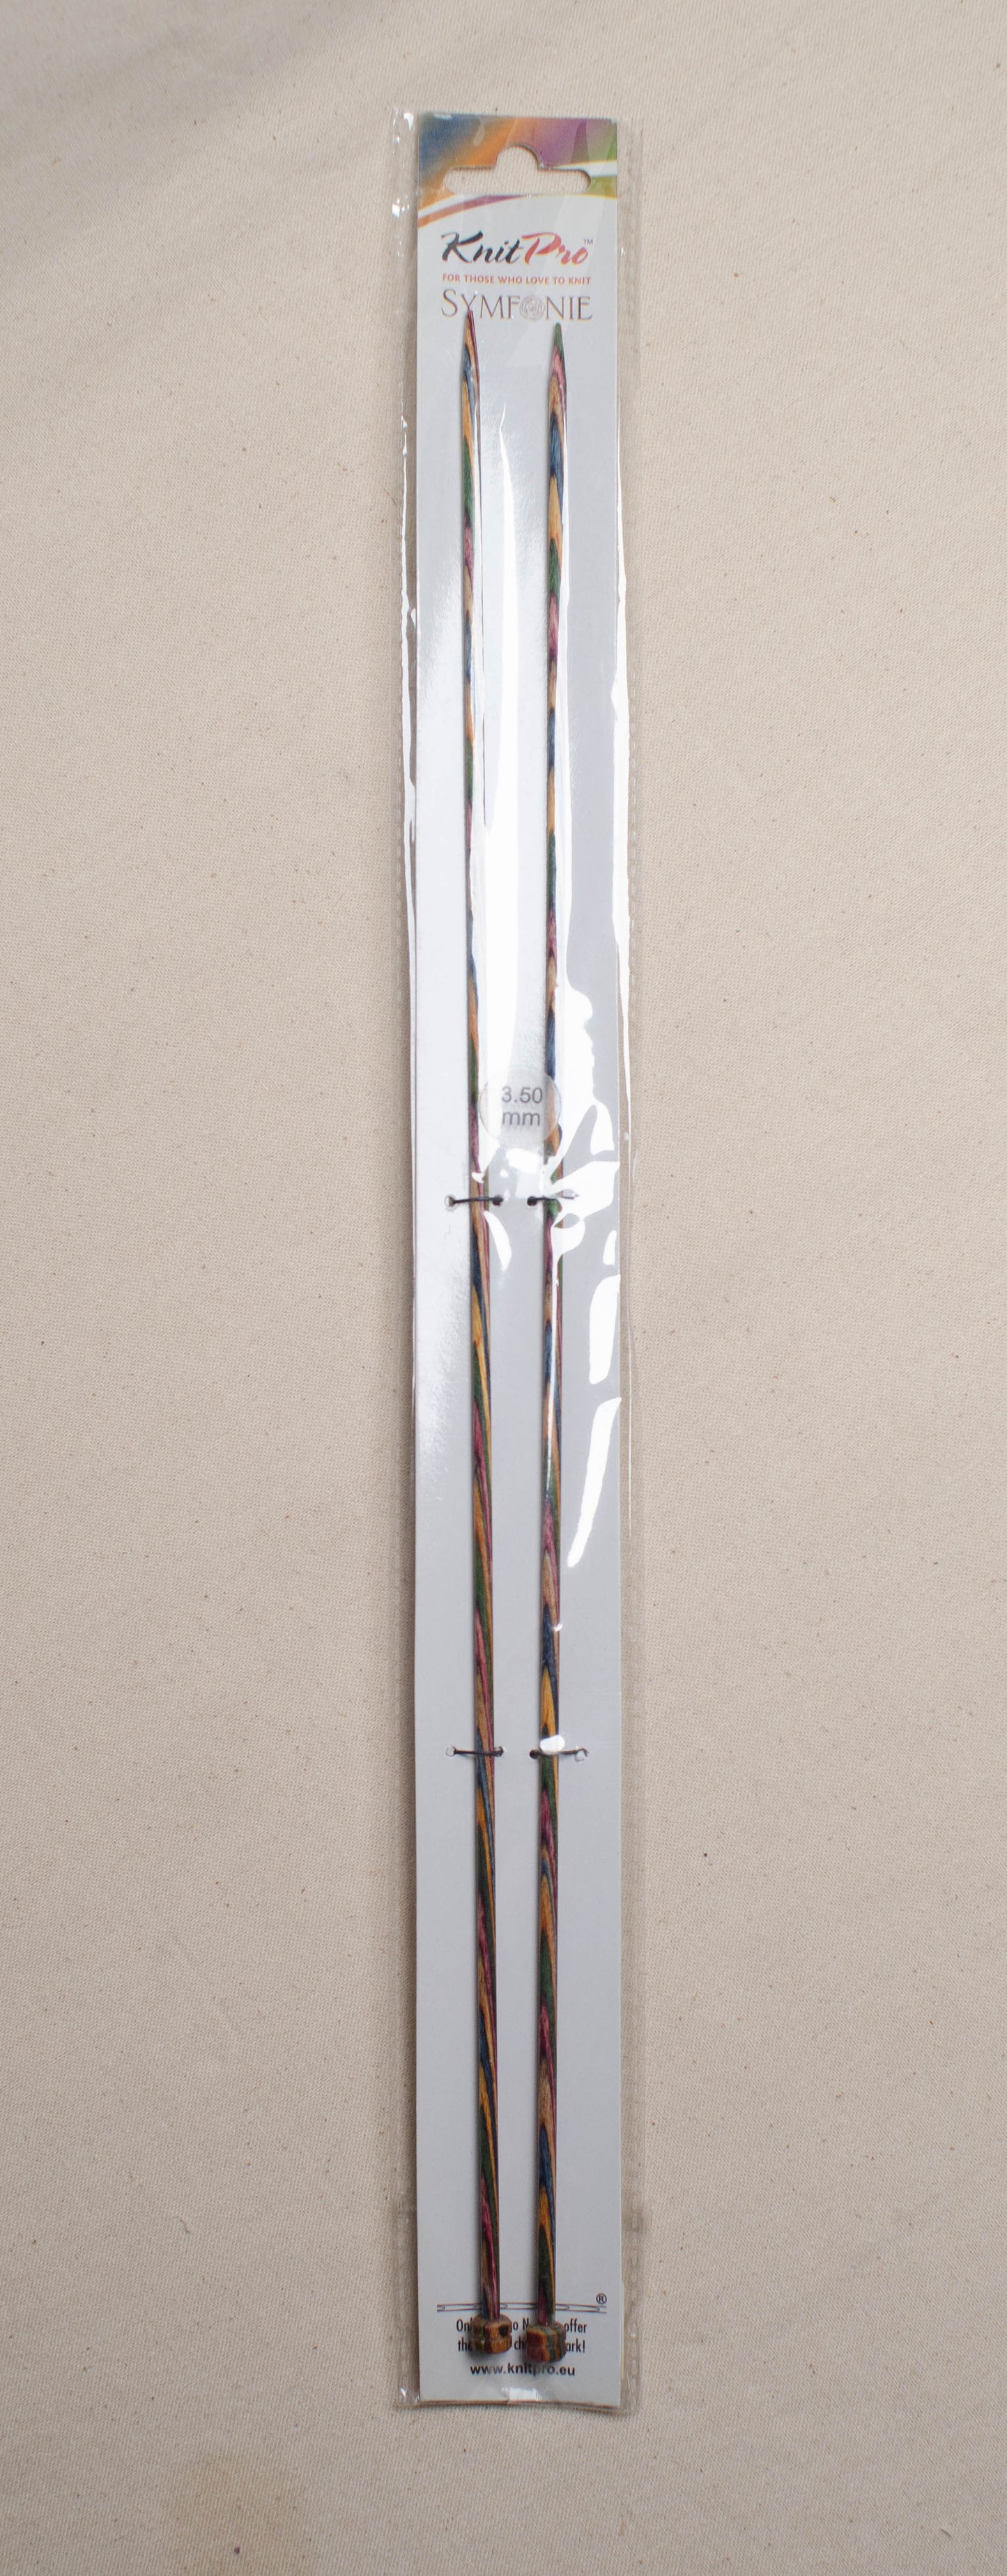 KnitPro 40 cm x 3.50 mm Symfonie Single Pointed Needles, Multi-Color